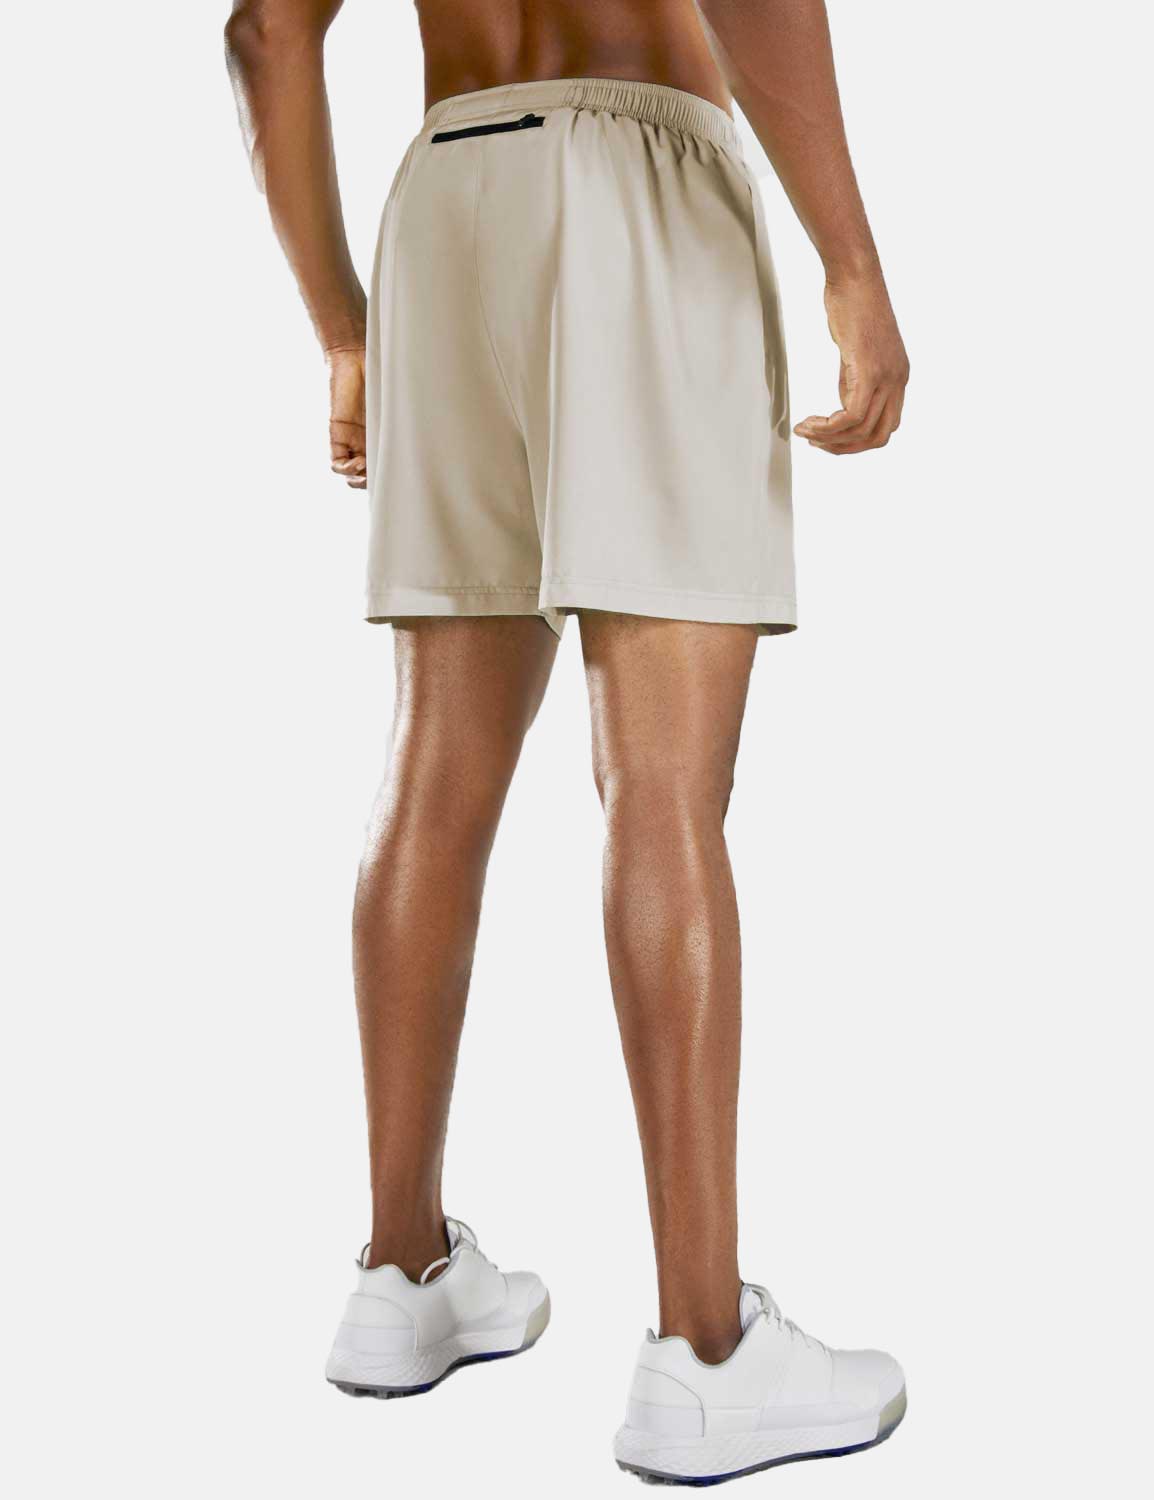 Baleaf Men's 5'' Light-Weight Quick Dry Fully Lined Shorts abd215 White Back